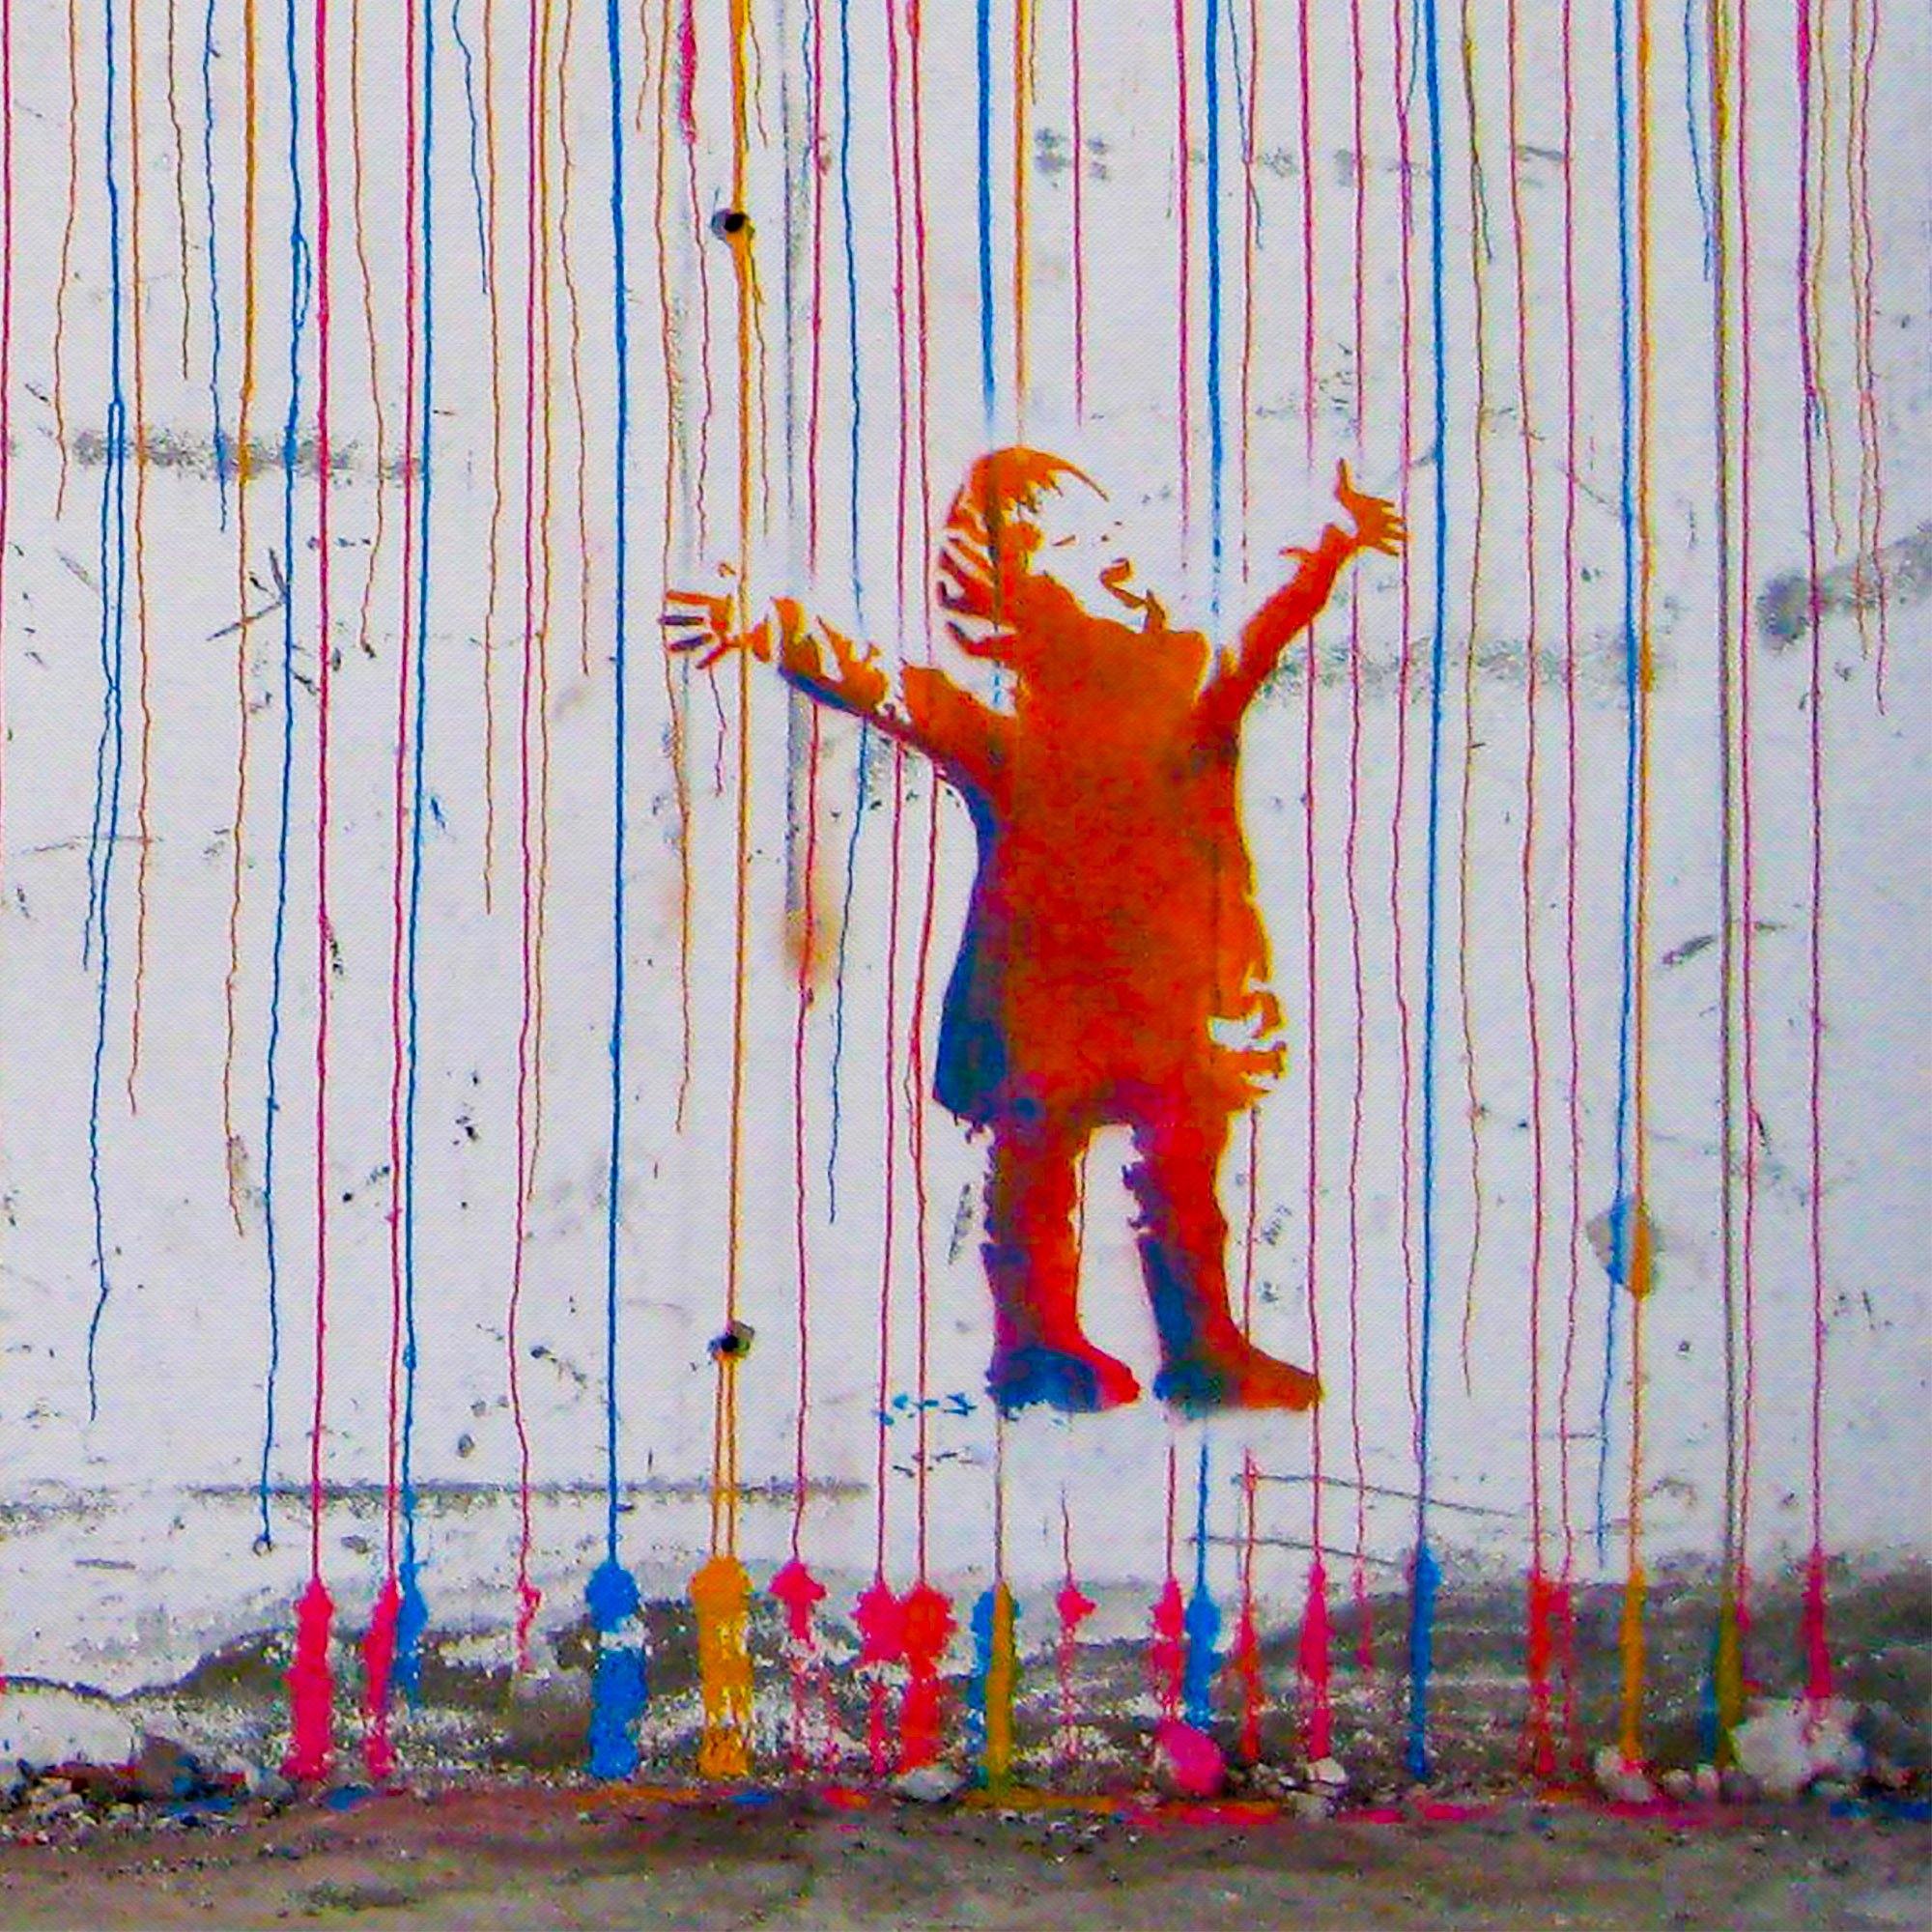 Banksy - Colored Rain Canvas Wall Art - SharpWallArts